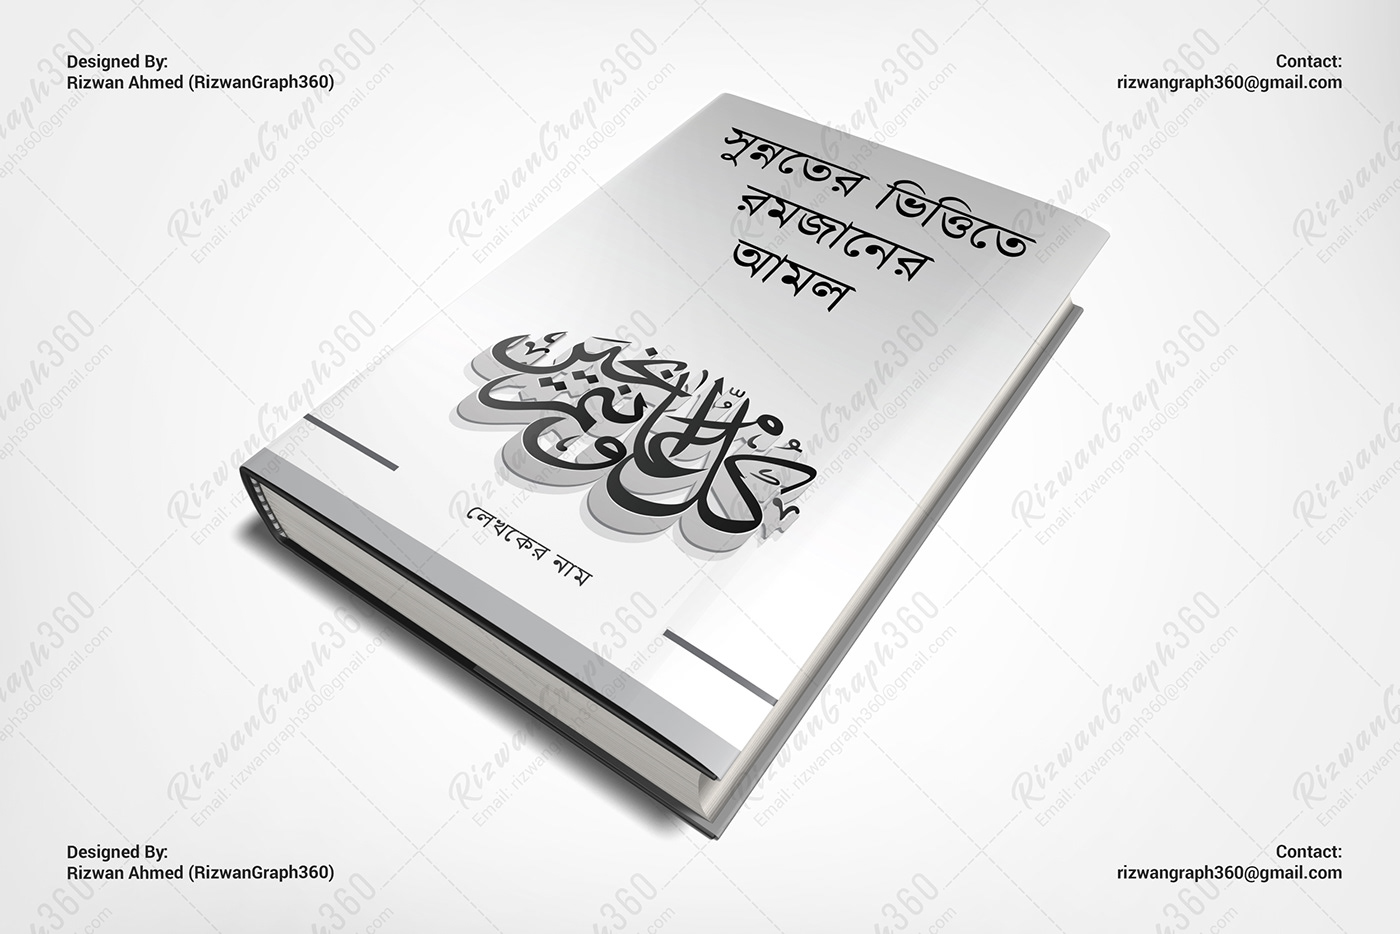 bangla book cover islamic rizwanagraph360 rizwanahmed rizwangraph typography   Islamic Book Cover kindle cover